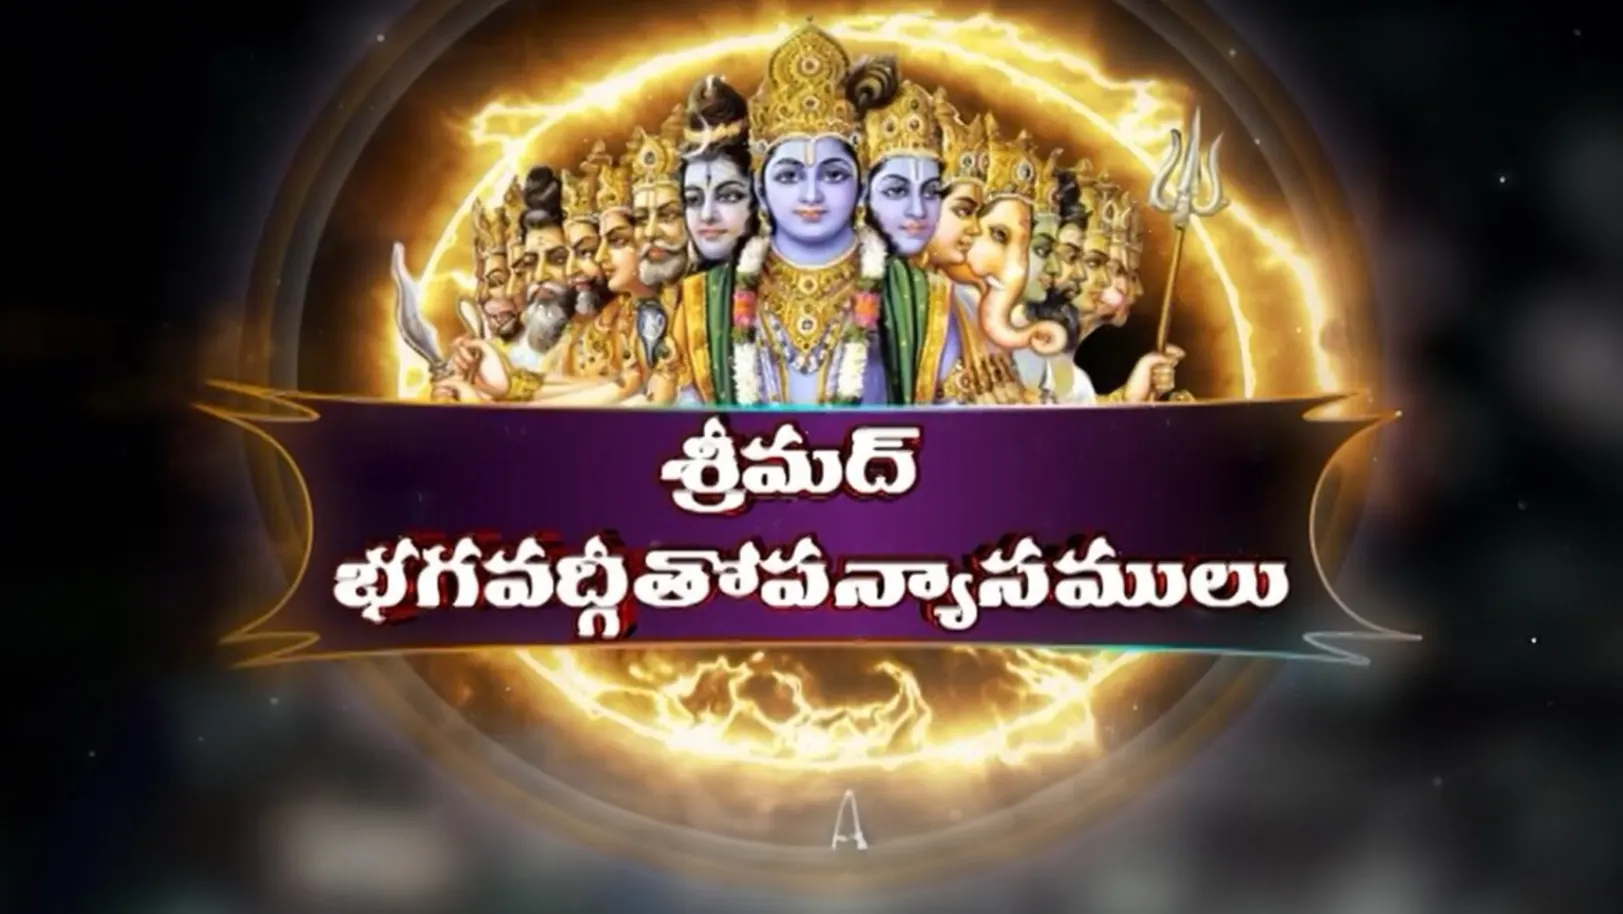 Srimad Bhagavadgeethopanyasamulu Streaming Now On Aastha Telugu